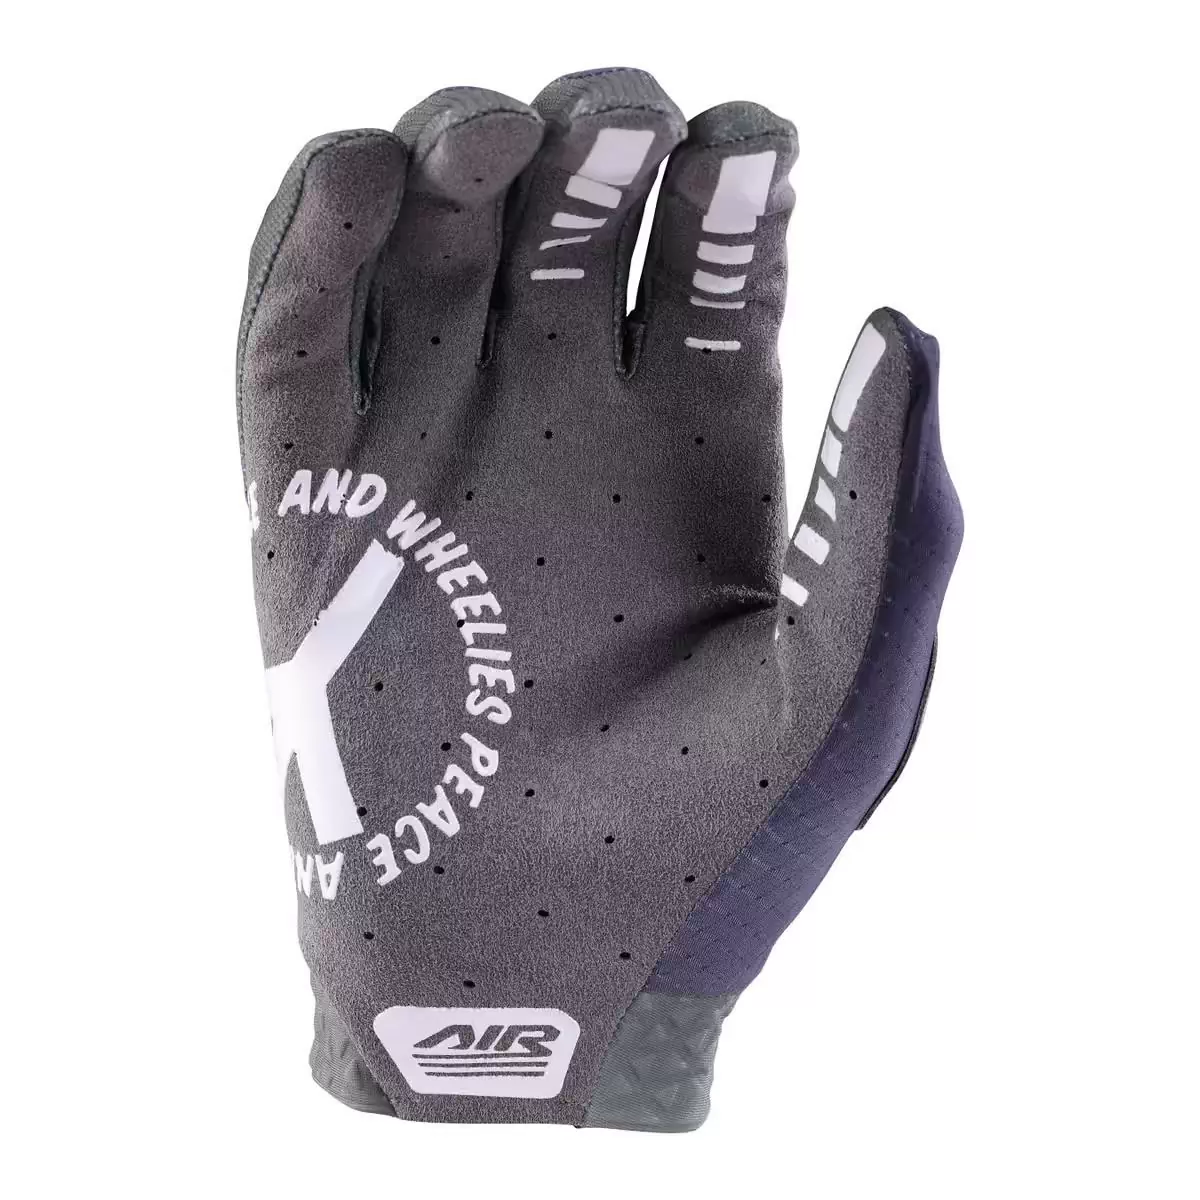 MTB Gloves Air Glove Lucid Army Green Grey/Blue Size M #2